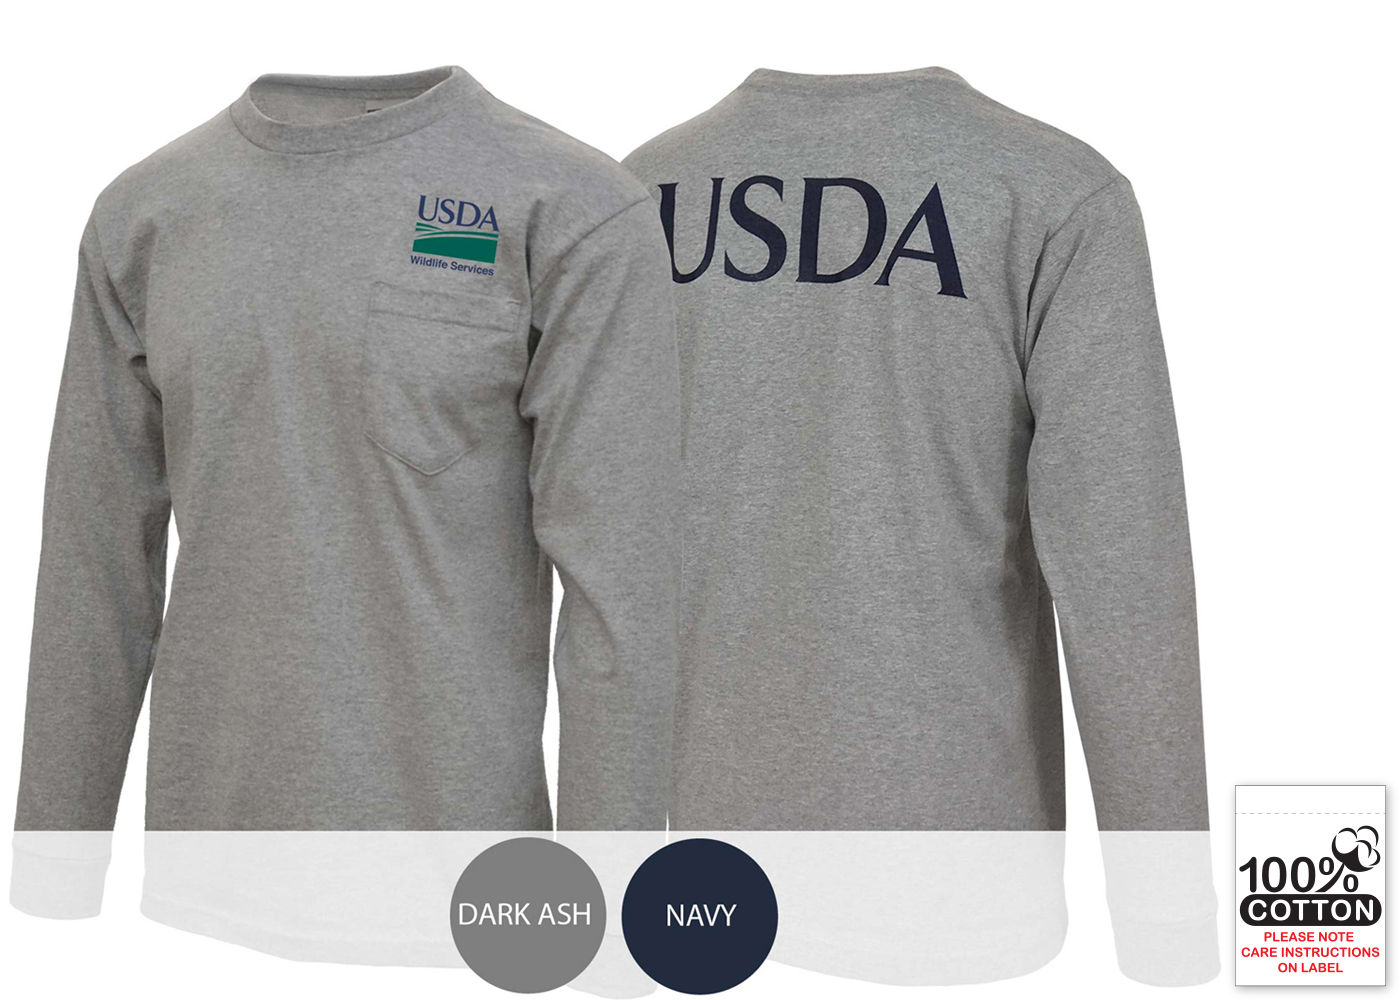 Unisex Long Sleeve Cotton T-Shirt with Pocket with USDA on back